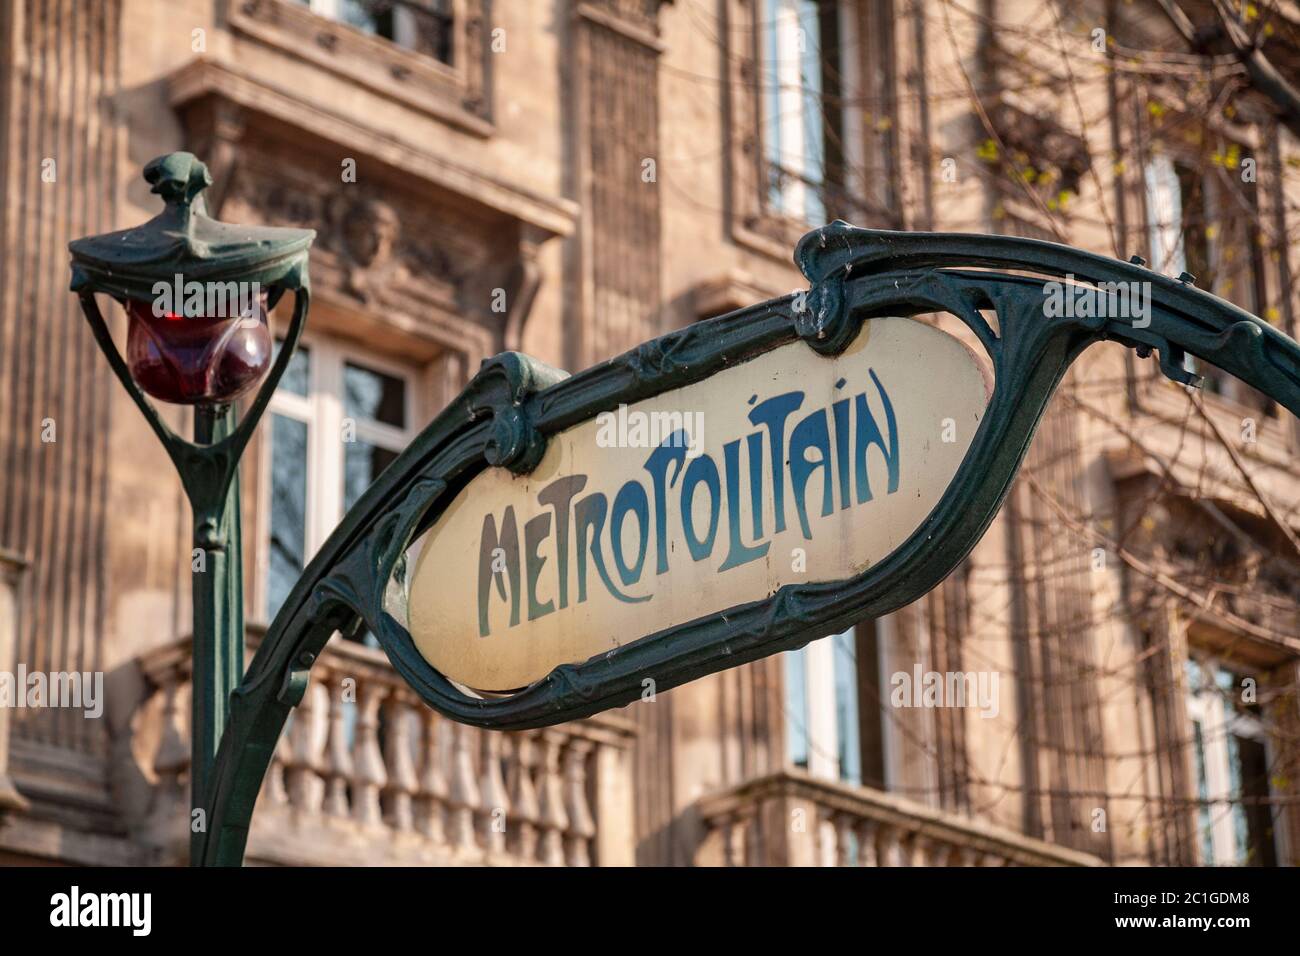 Metro-Schild, Saint-Michel, Paris, Frankreich Stockfoto